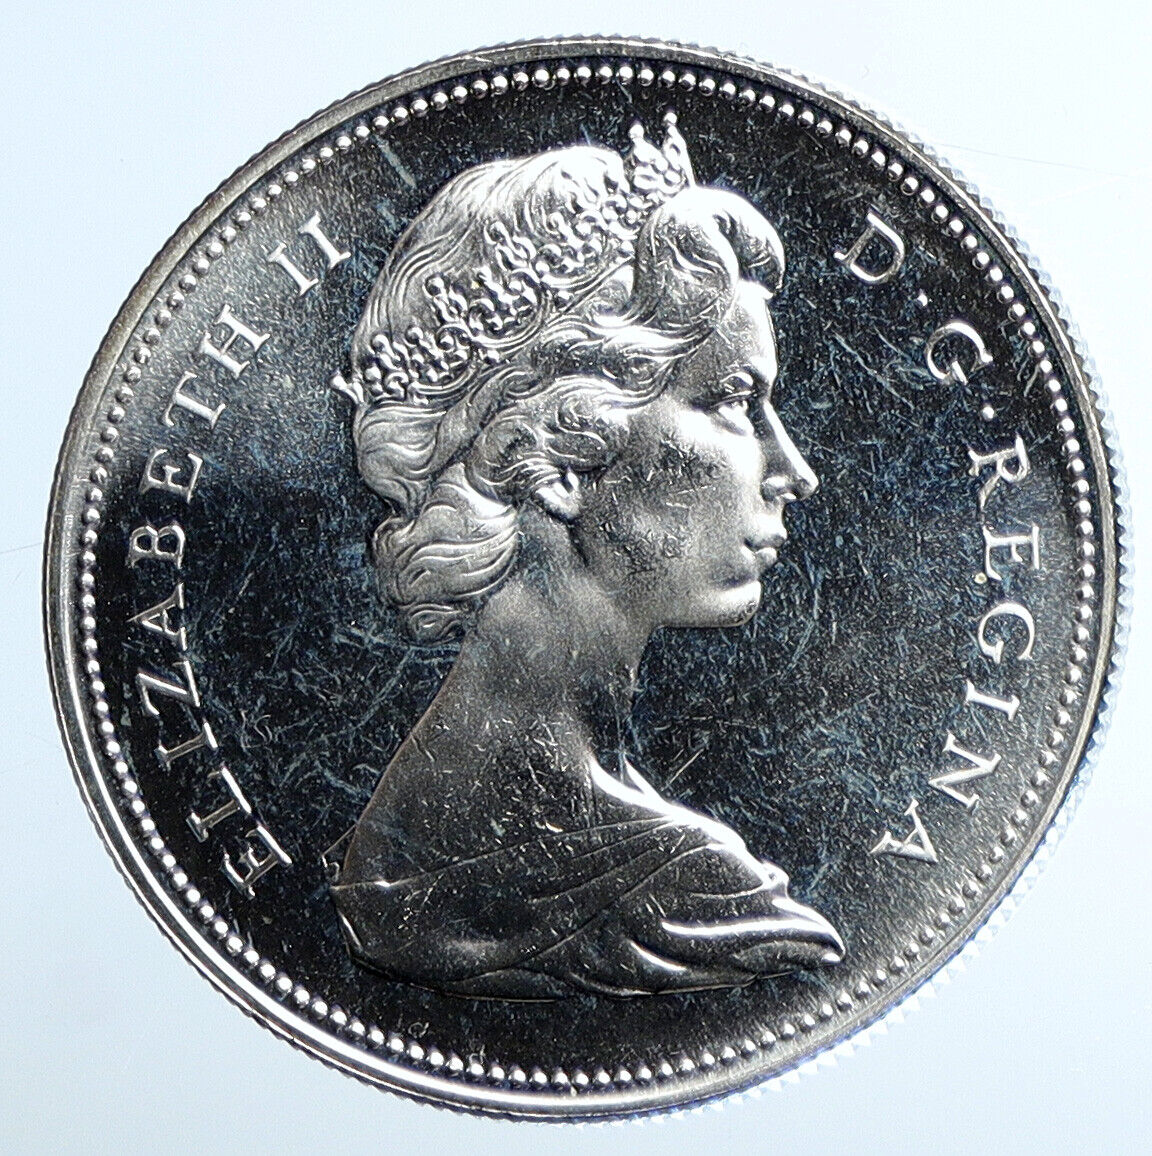 1966 CANADA w UK Queen Elizabeth II Voyagers Genuine Silver Dollar Coin i111445